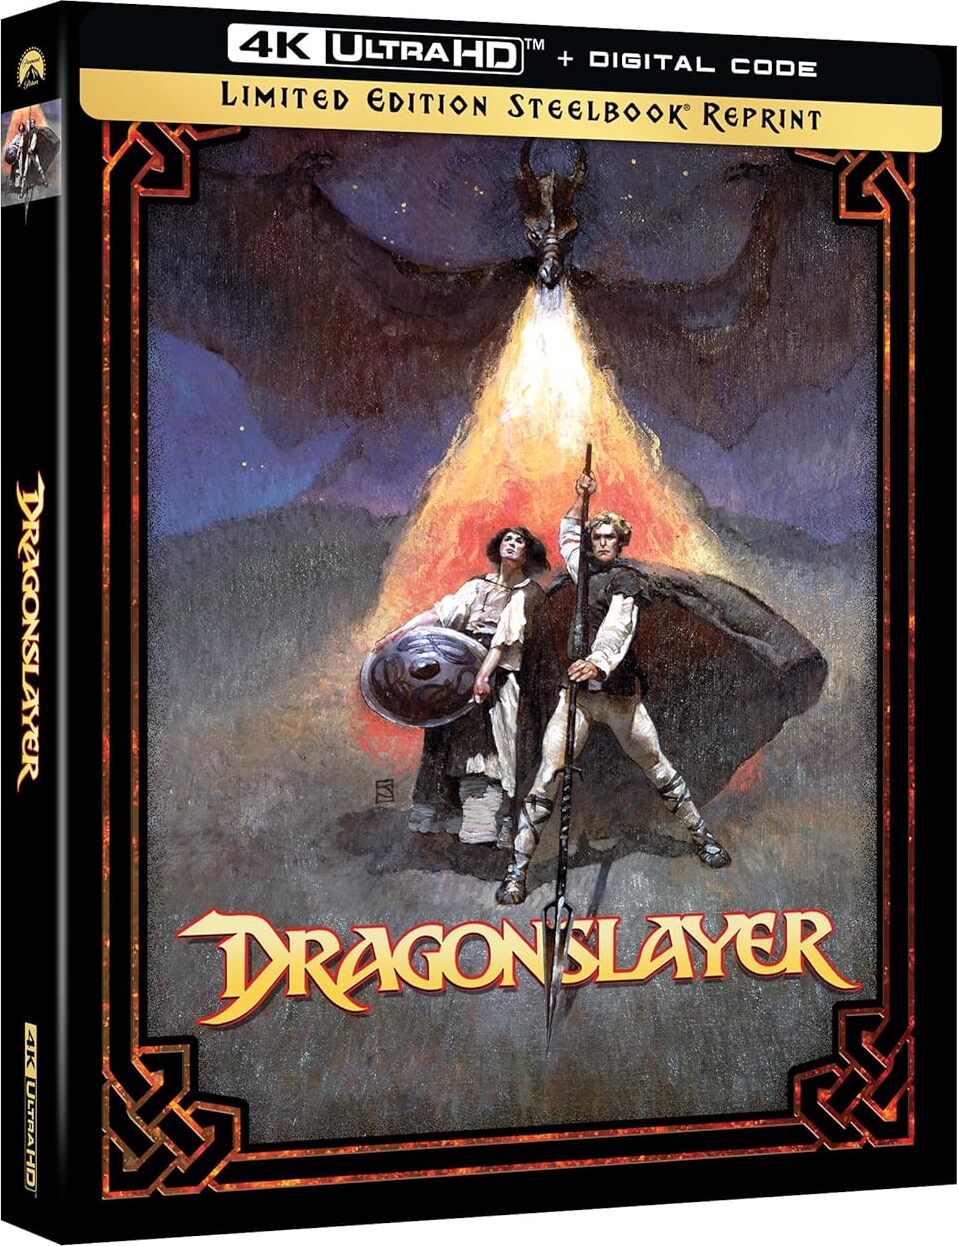 Dragonslayer [Steelbook] [4K UHD] [US]